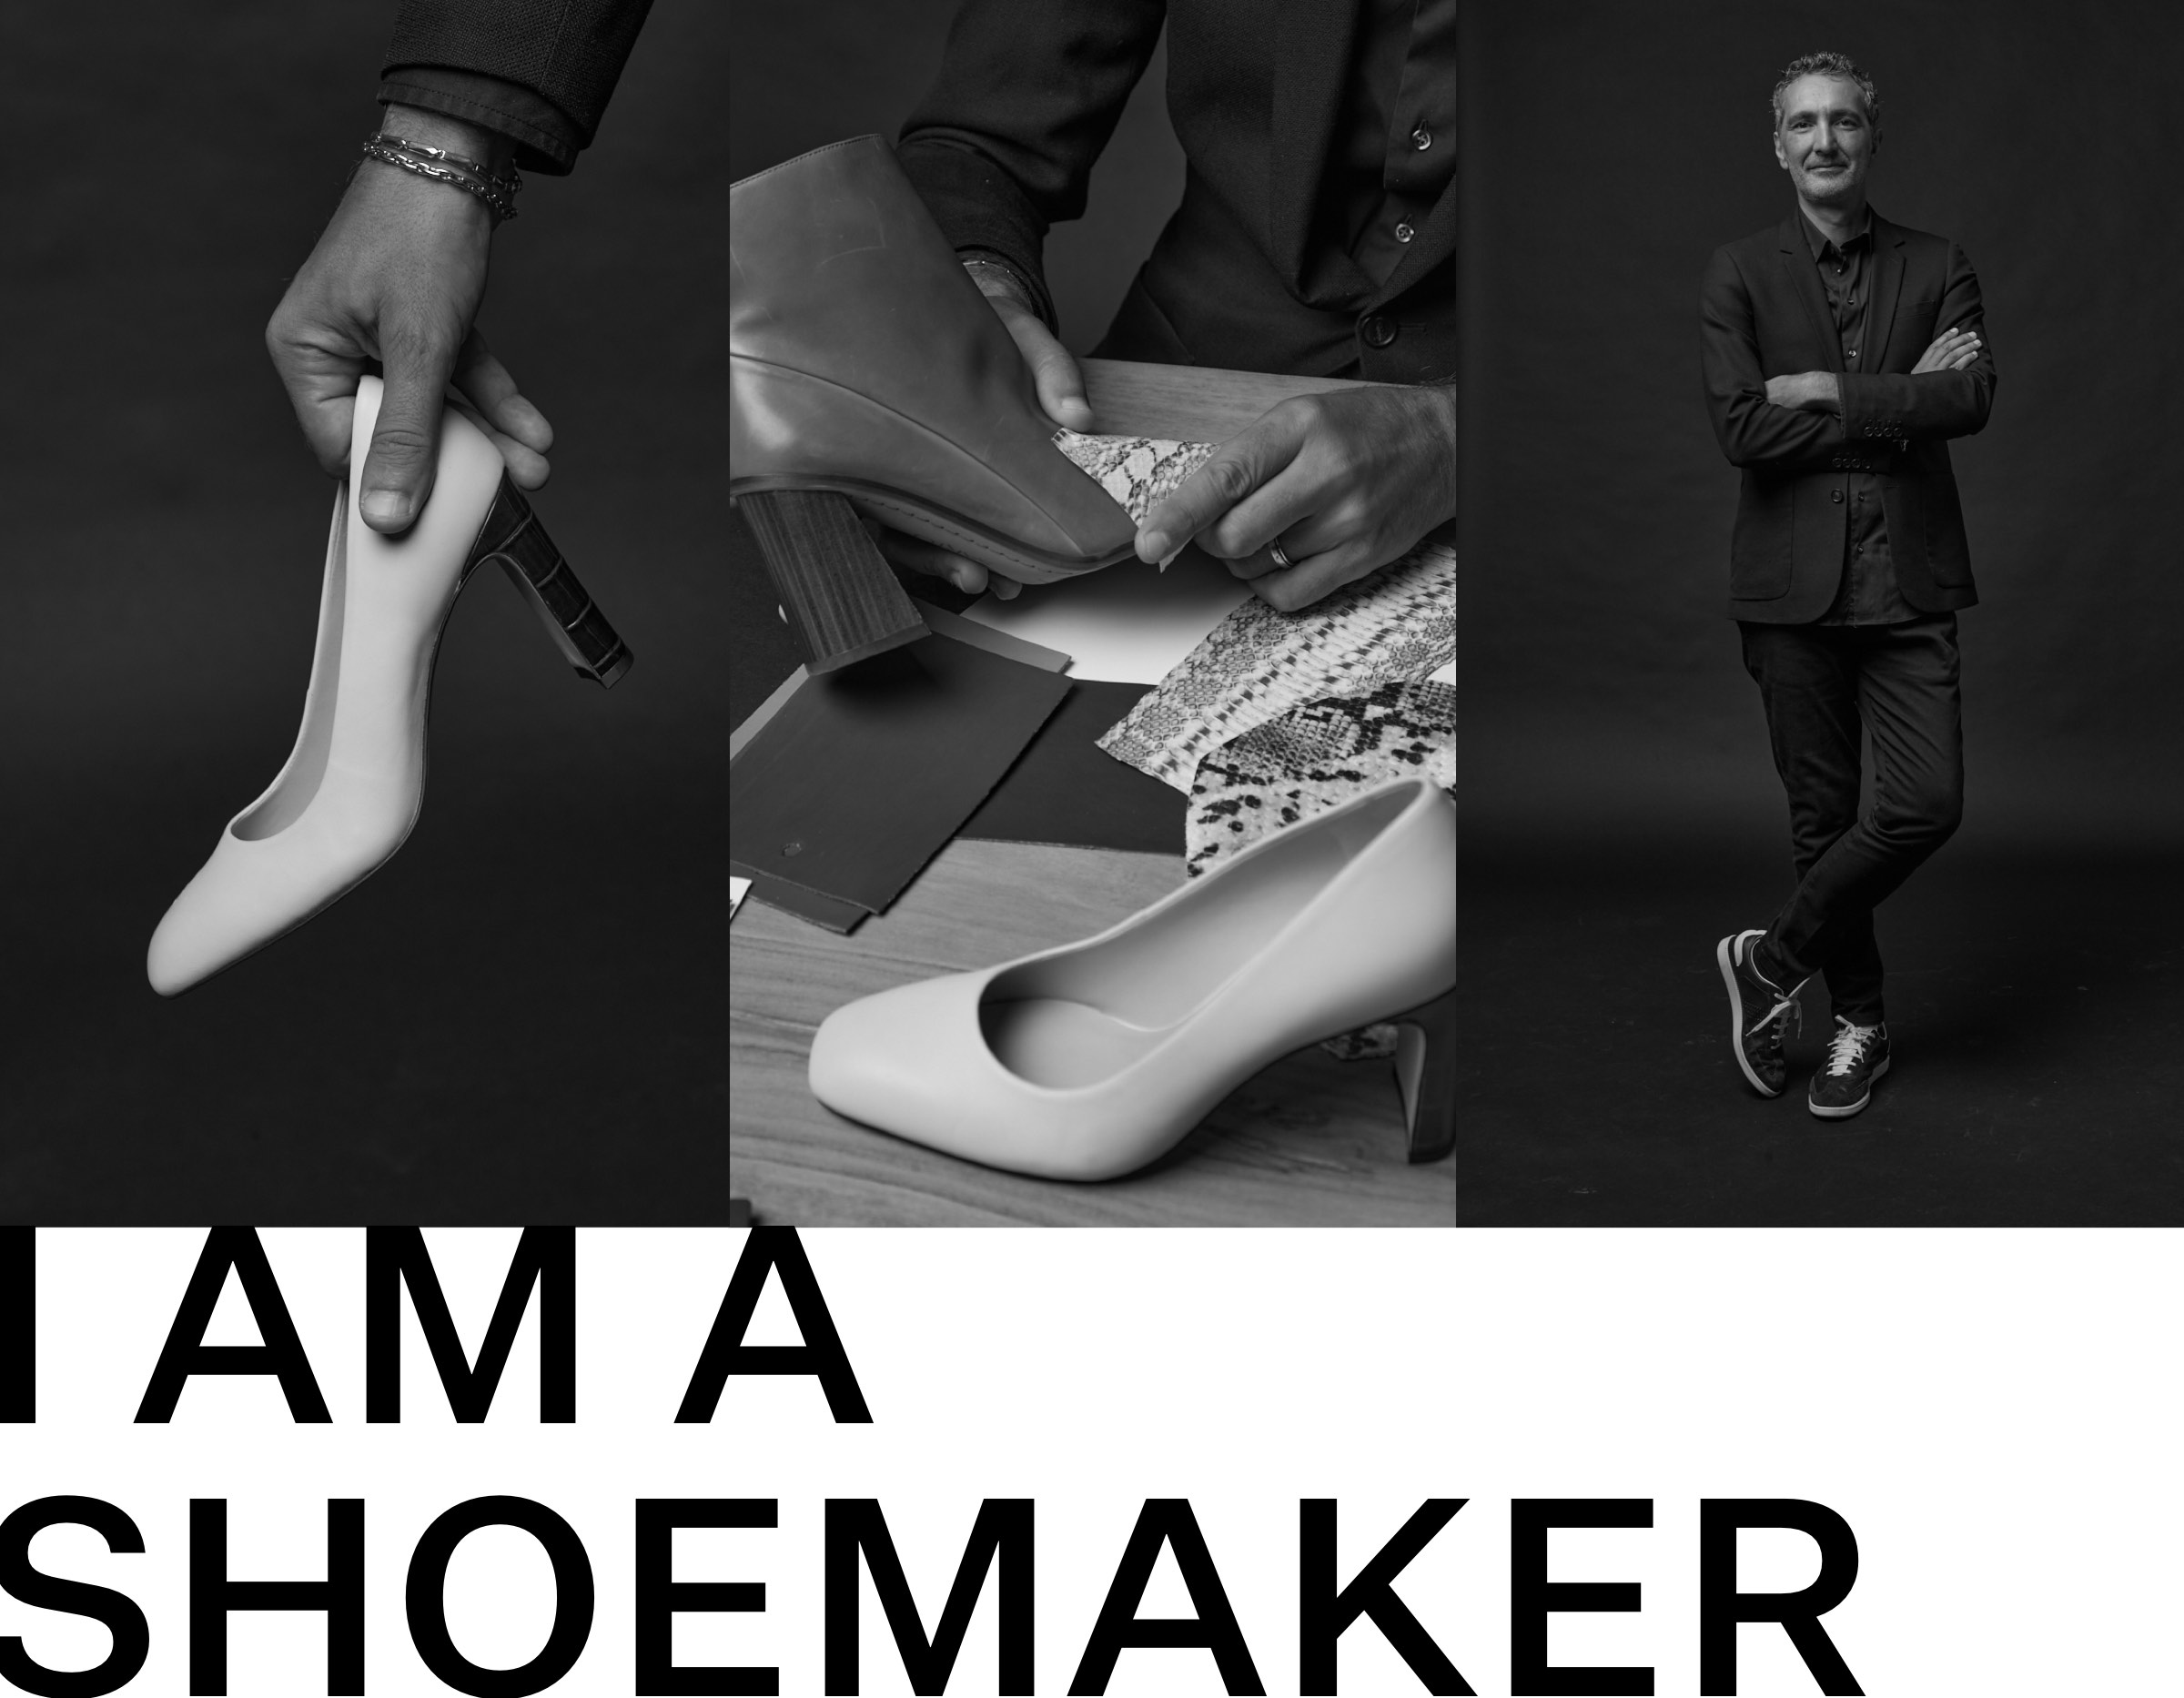 Gionata the Shoemaker